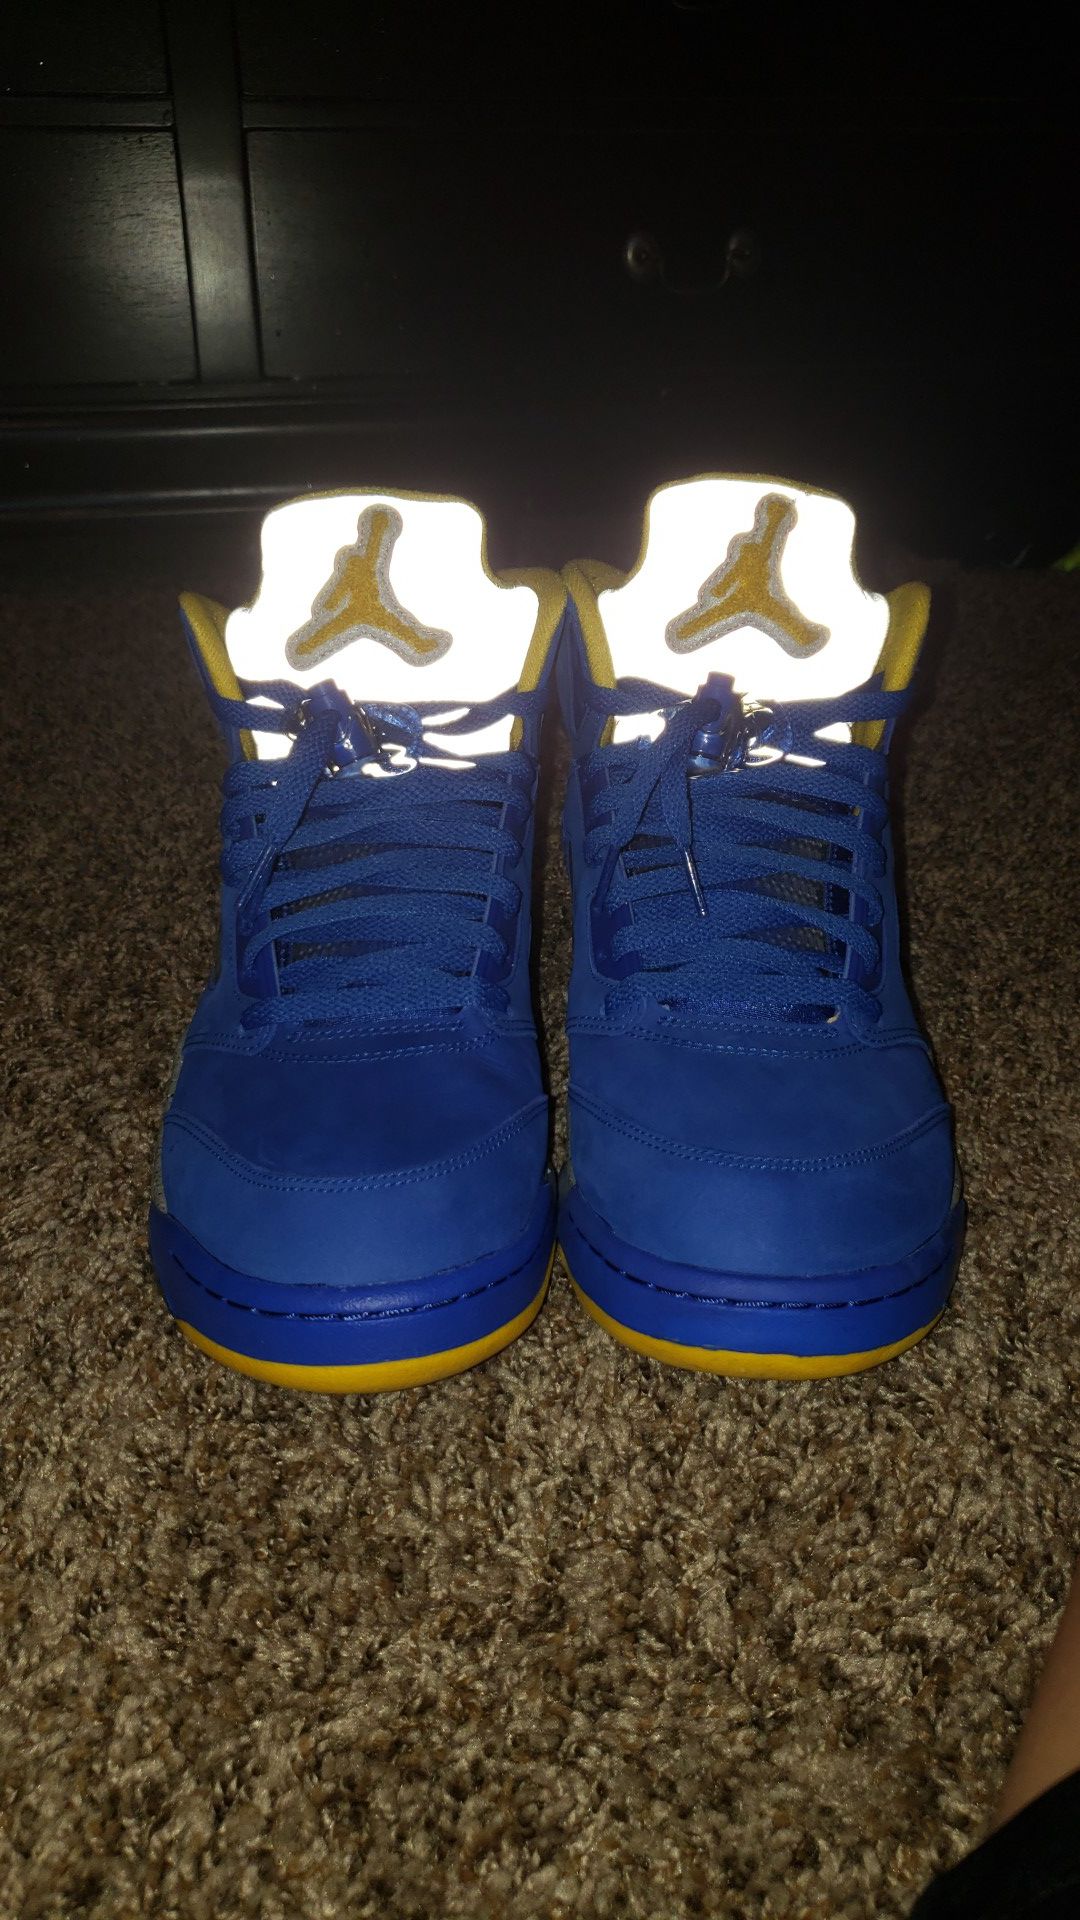 Jordan 5s Blue and yellow